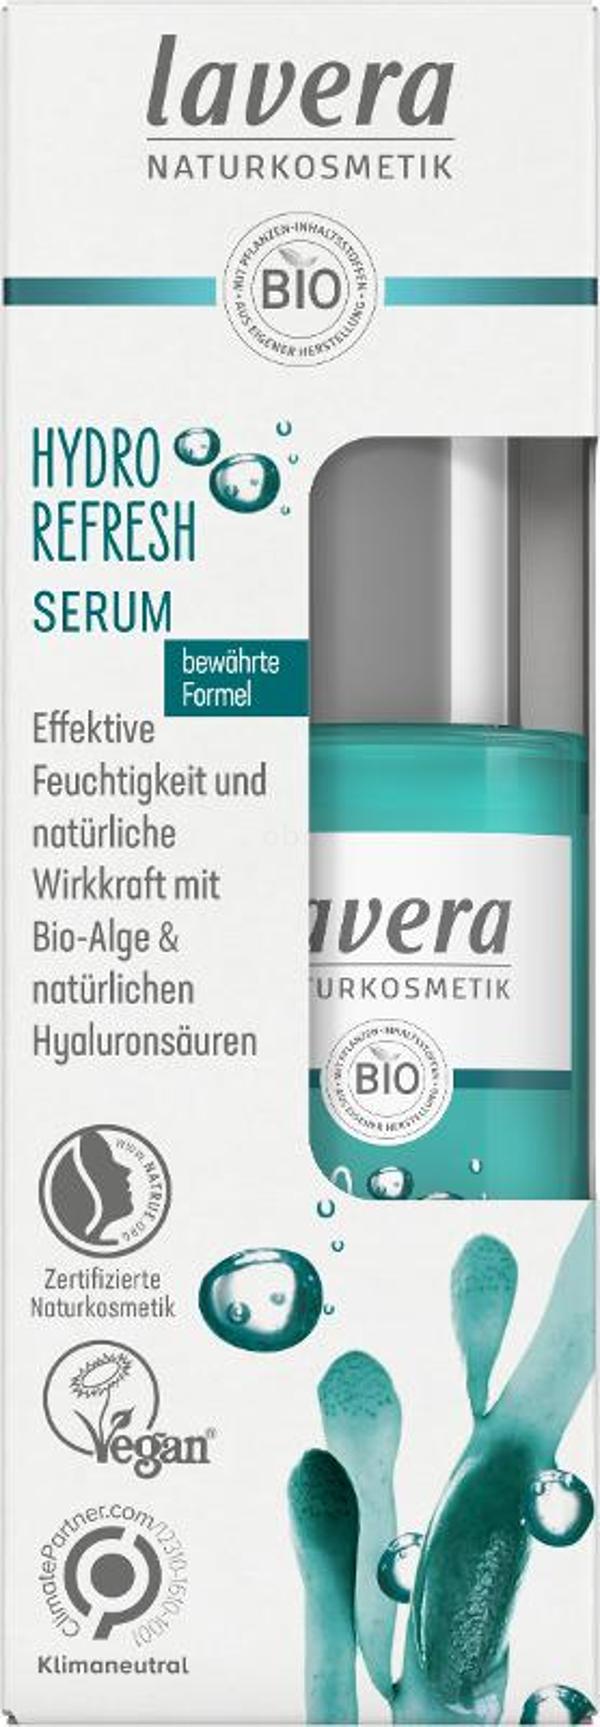 Produktfoto zu Serum Hydro Refresh Serum